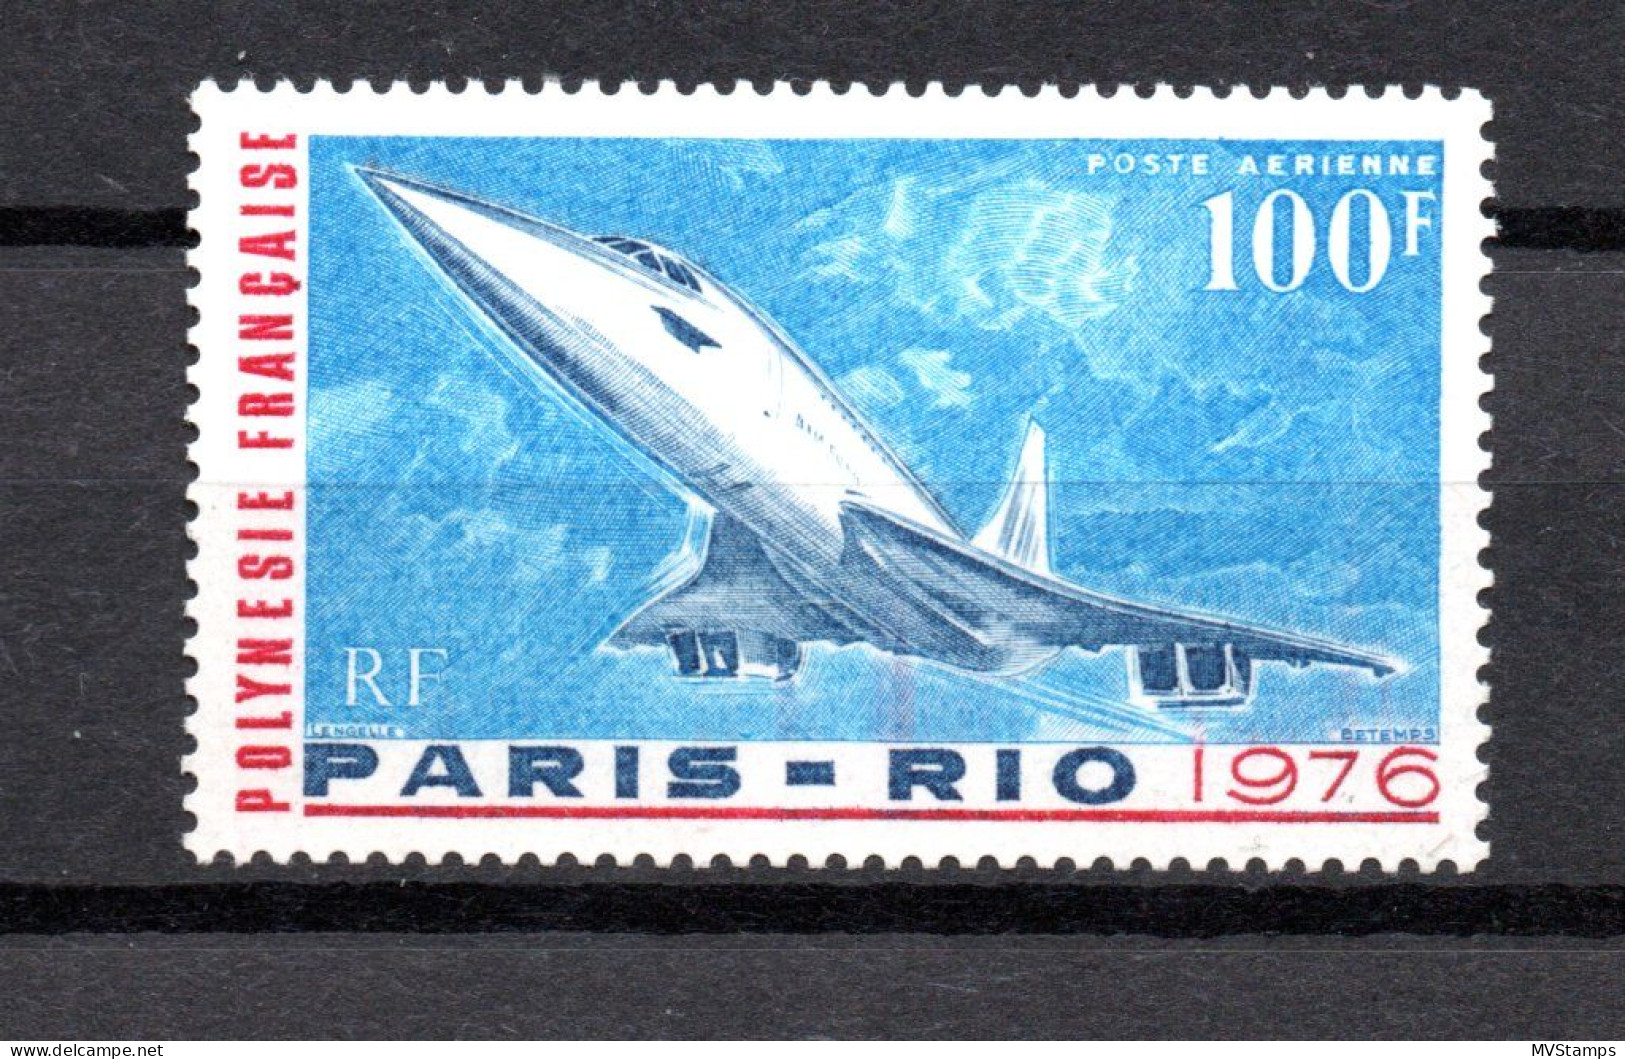 Polynesia (France ) 1976 Concorde/Aviation/airmail Stamp (Michel 208) MNH - Ongebruikt